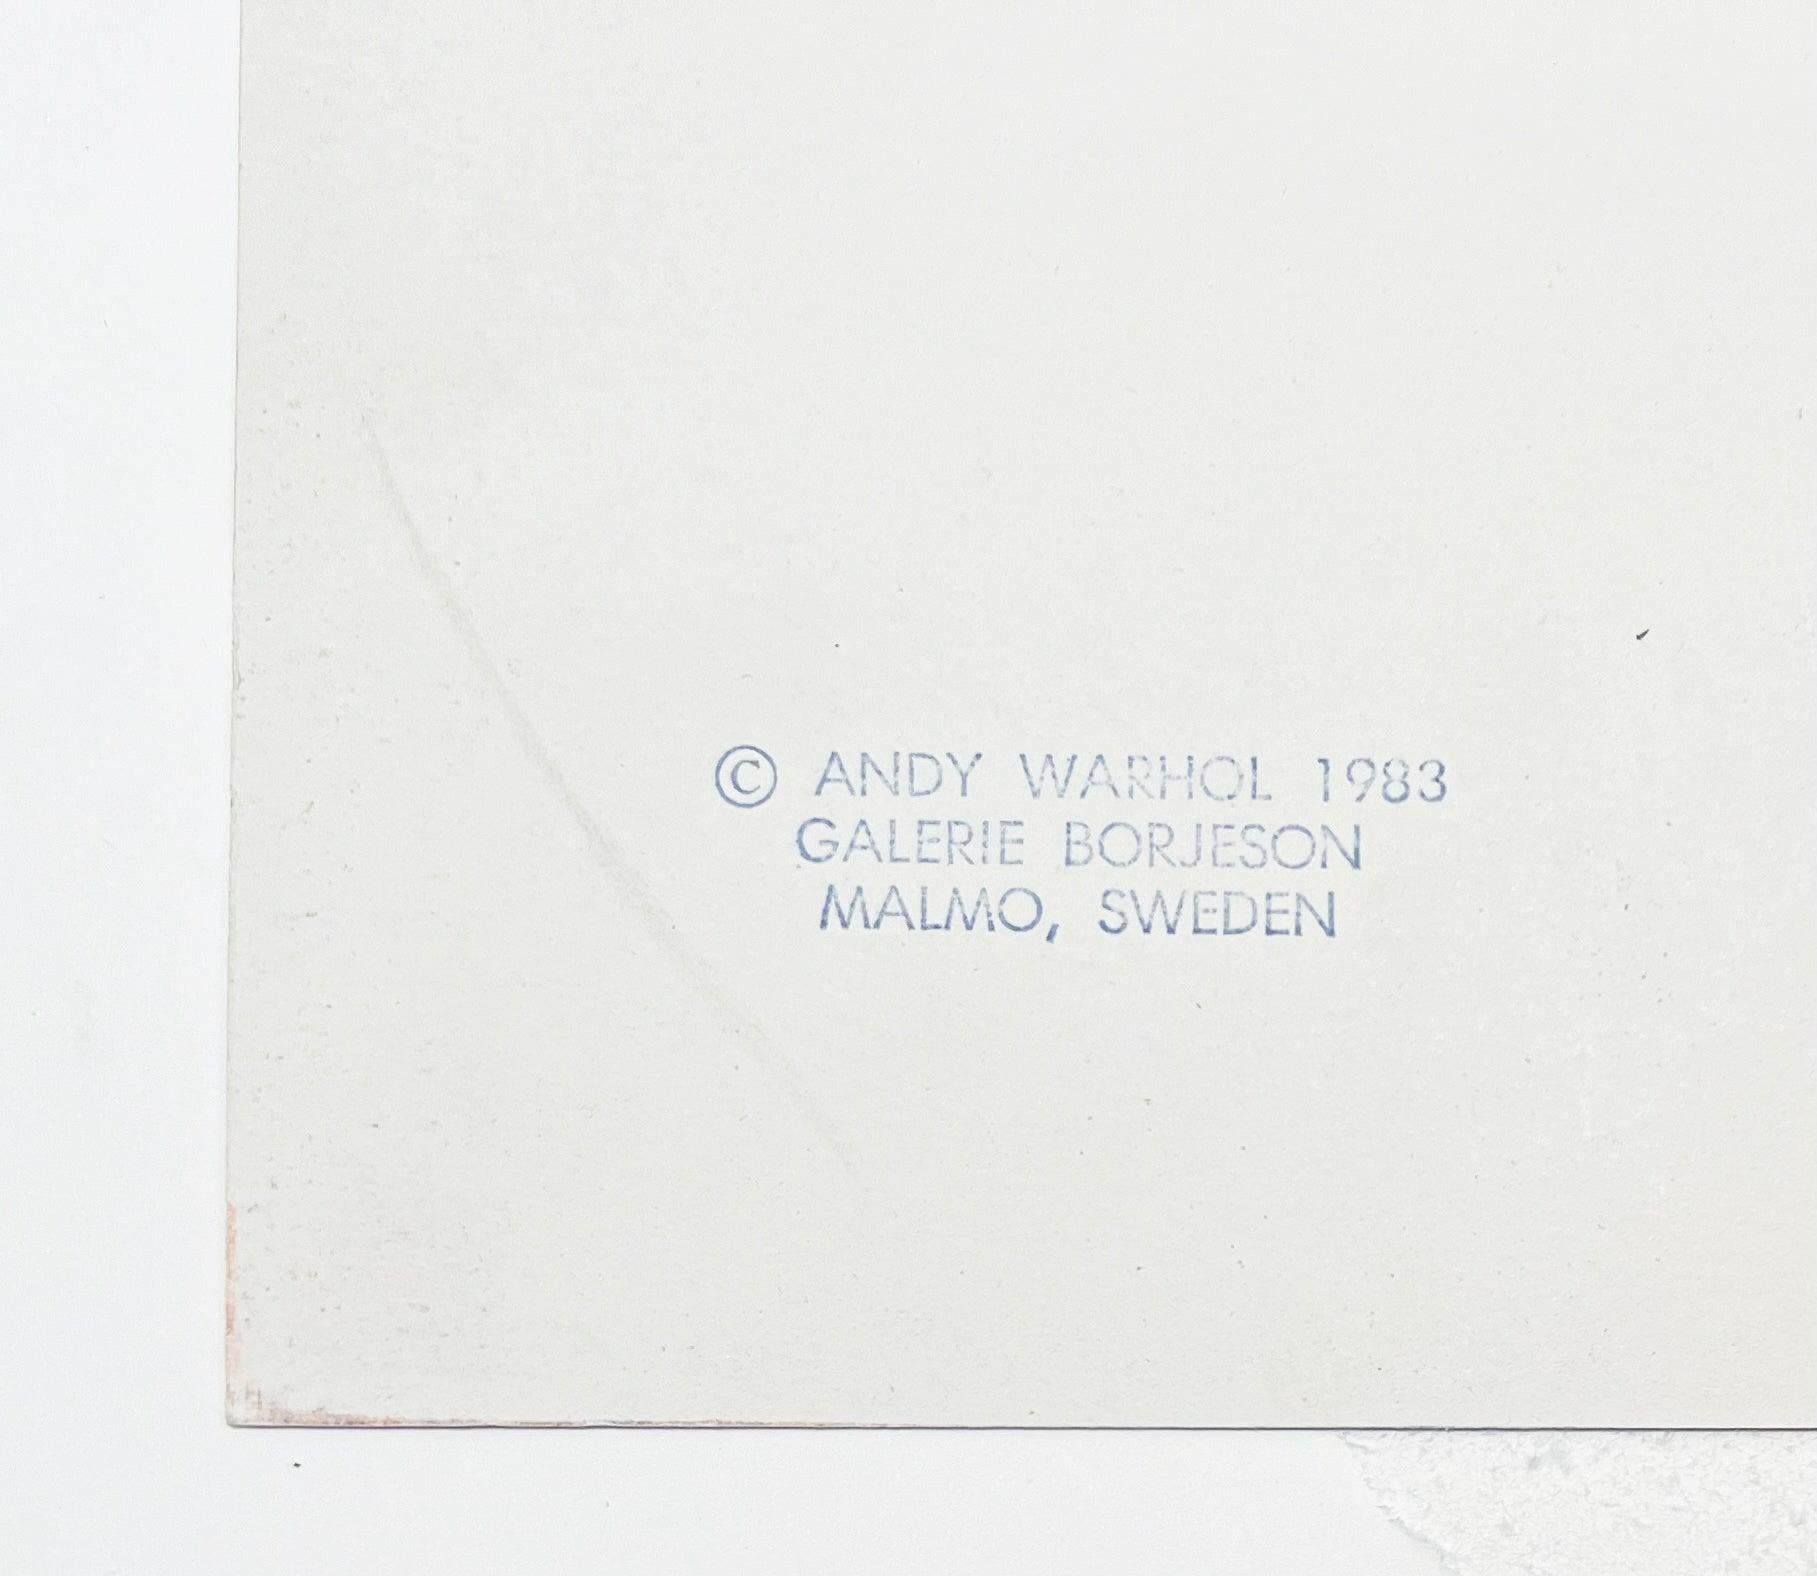 Artist: Andy Warhol
Title: Ingrid Bergman with Hat
Portfolio: Ingrid Bergman
Medium: Screenprint on Lenox Museum Board
Date: 1983
Edition: 32/250
Image Size: 38